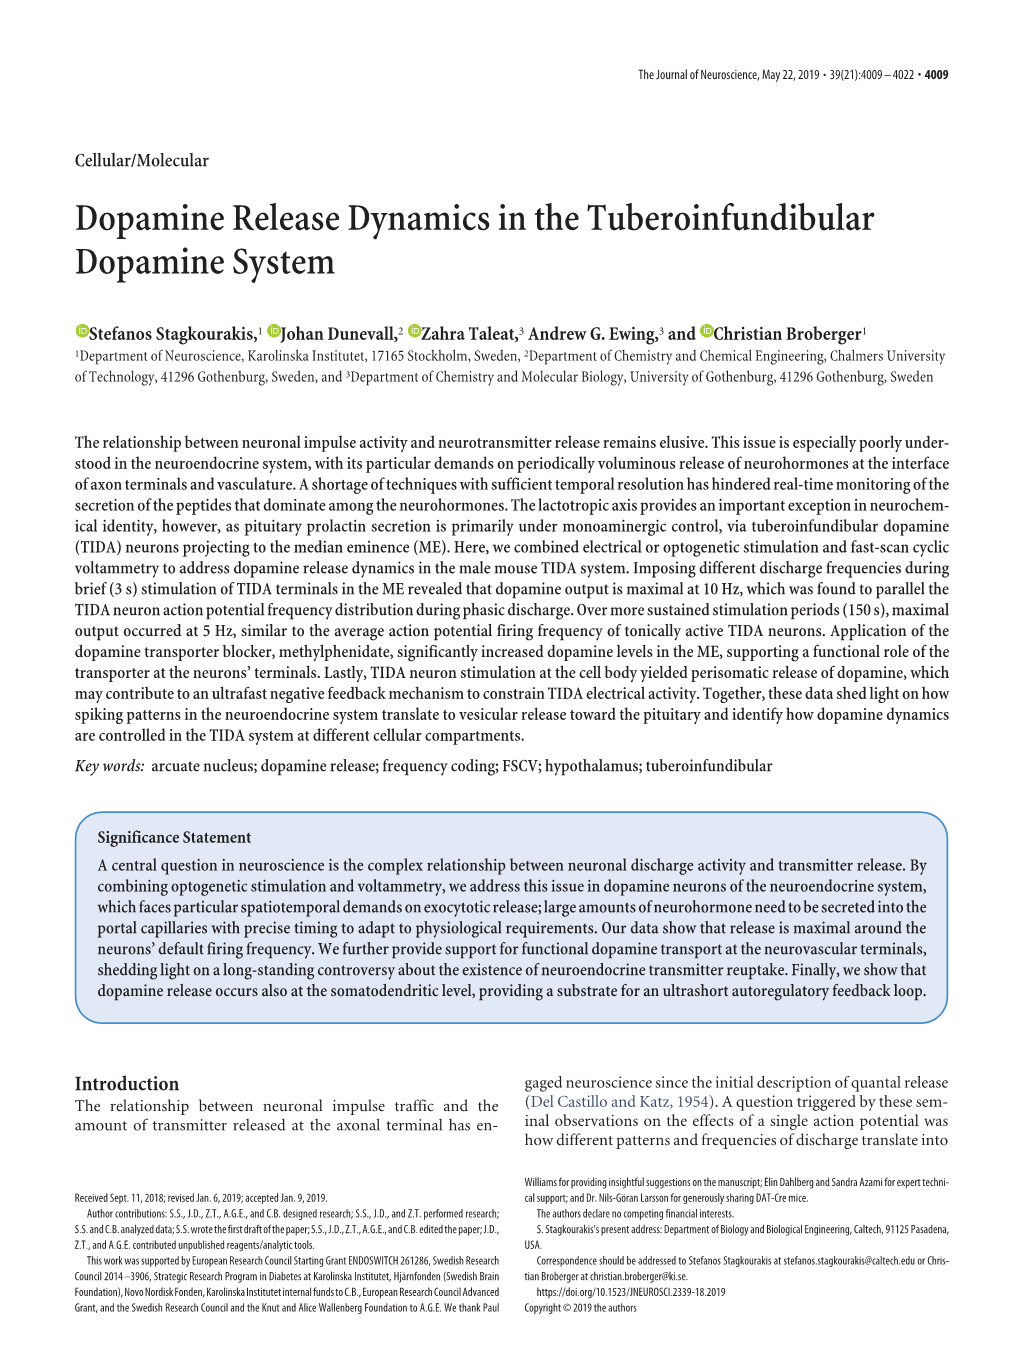 Dopamine Release Dynamics in the Tuberoinfundibular Dopamine System